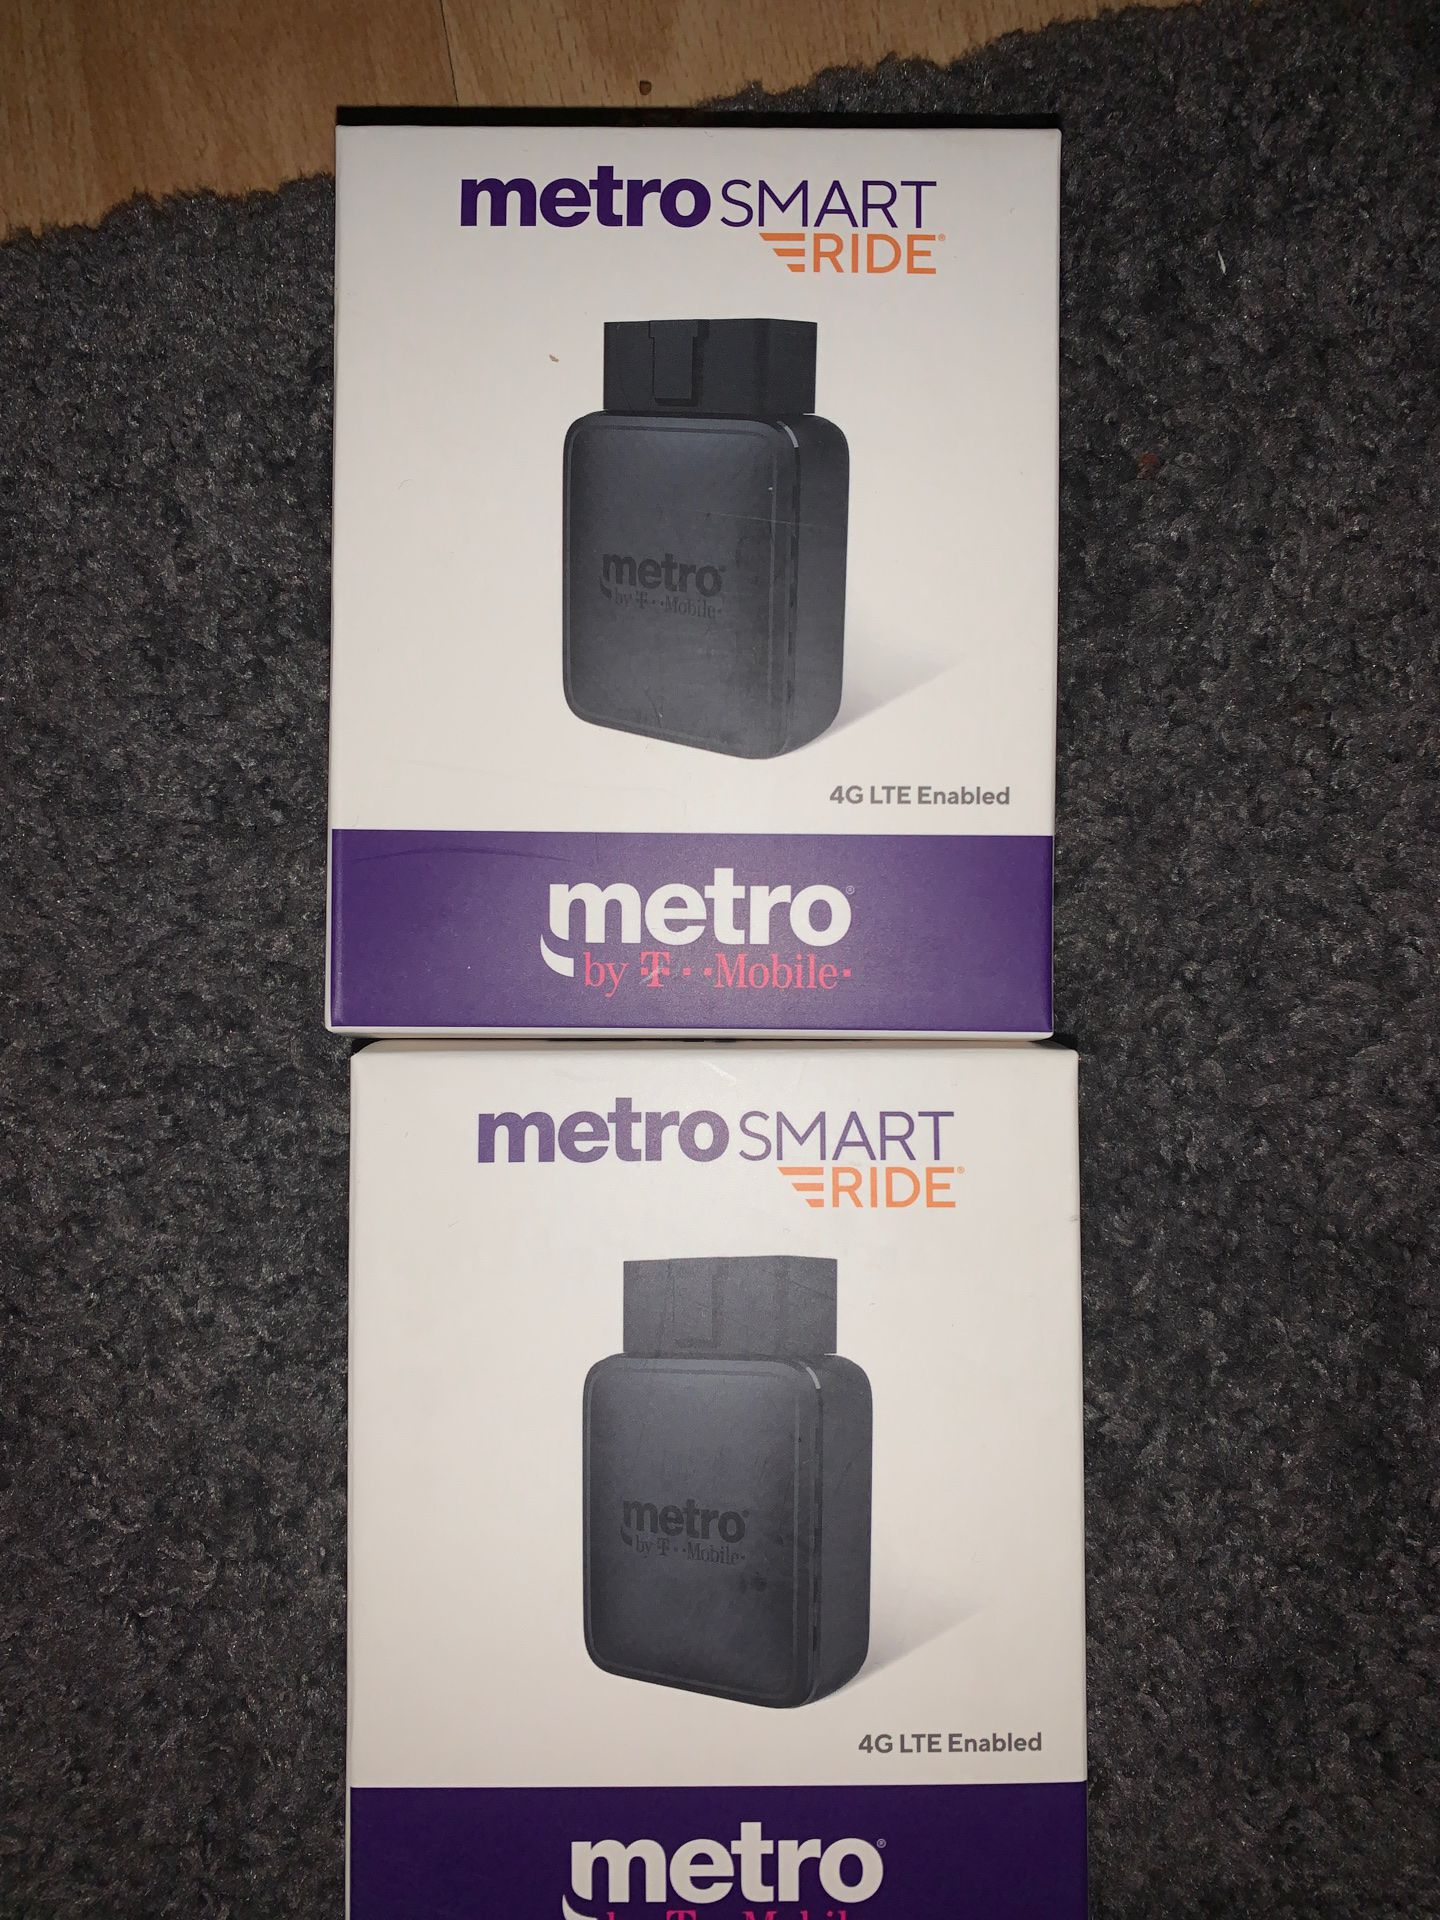 Metro smart ride hotspot